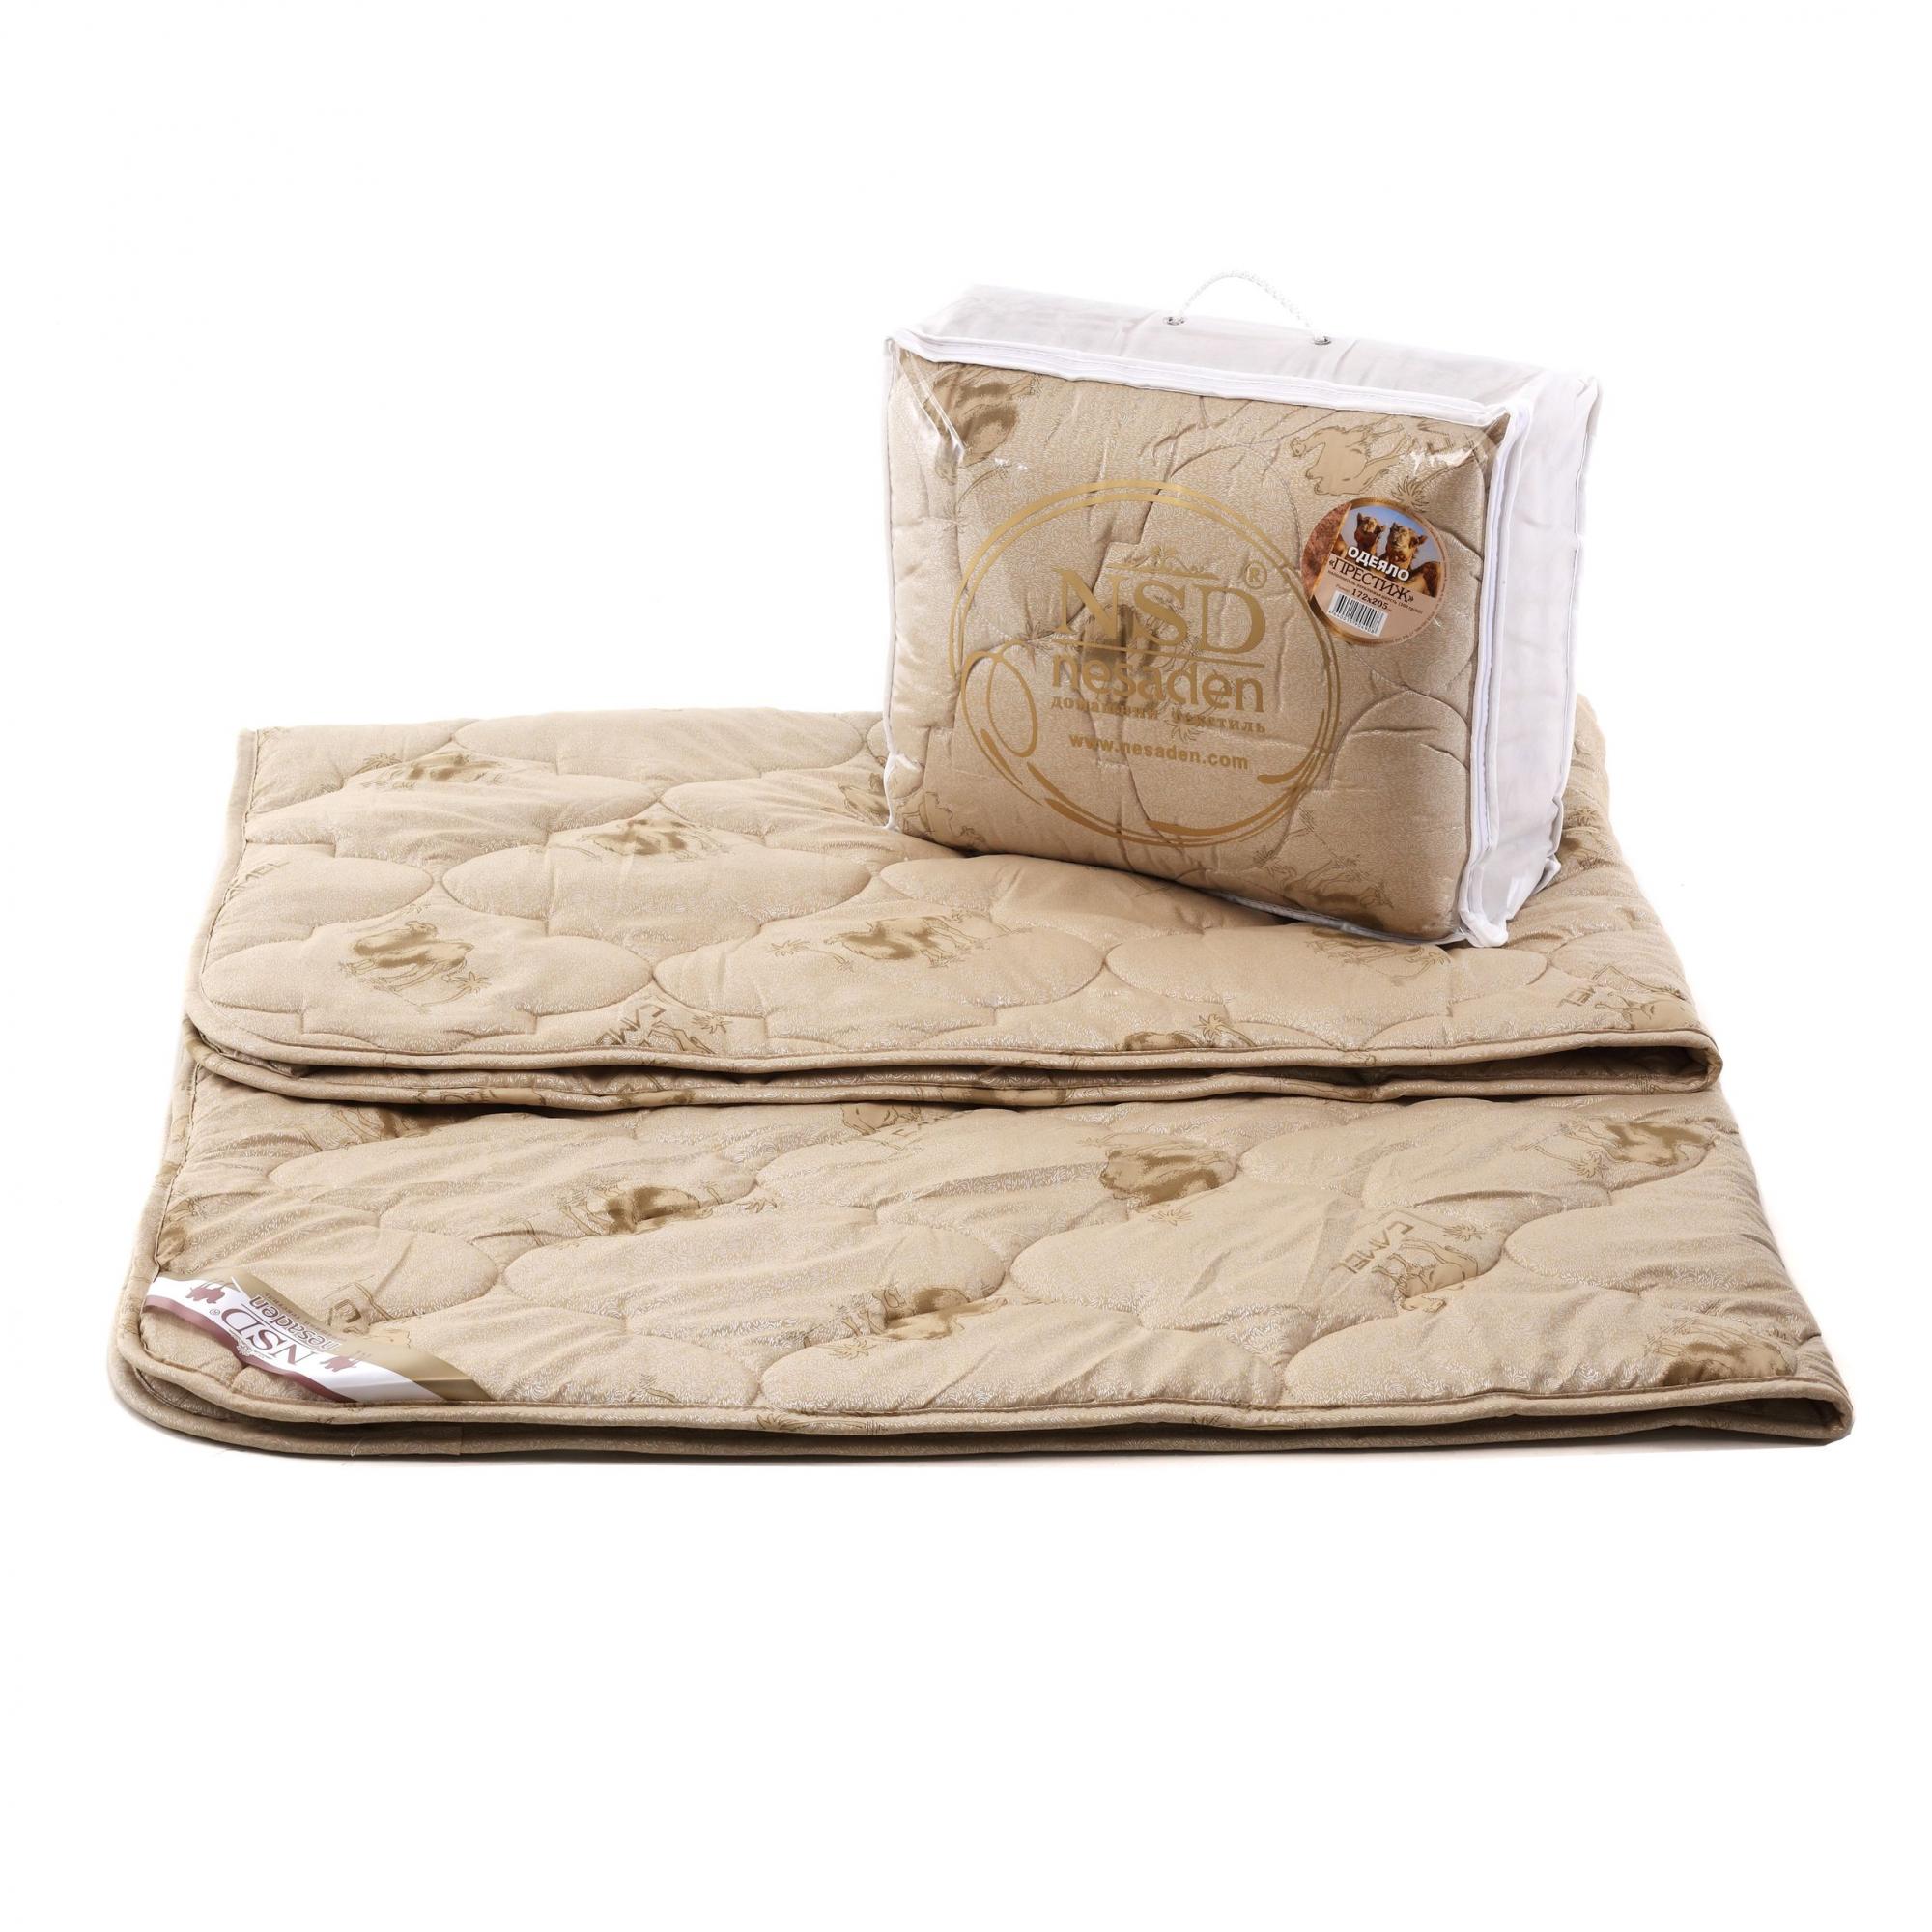 Одеяло Престиж-Верблюд( глосс-сатин; верблюжья шерсть,300 г/кв.м.) фото